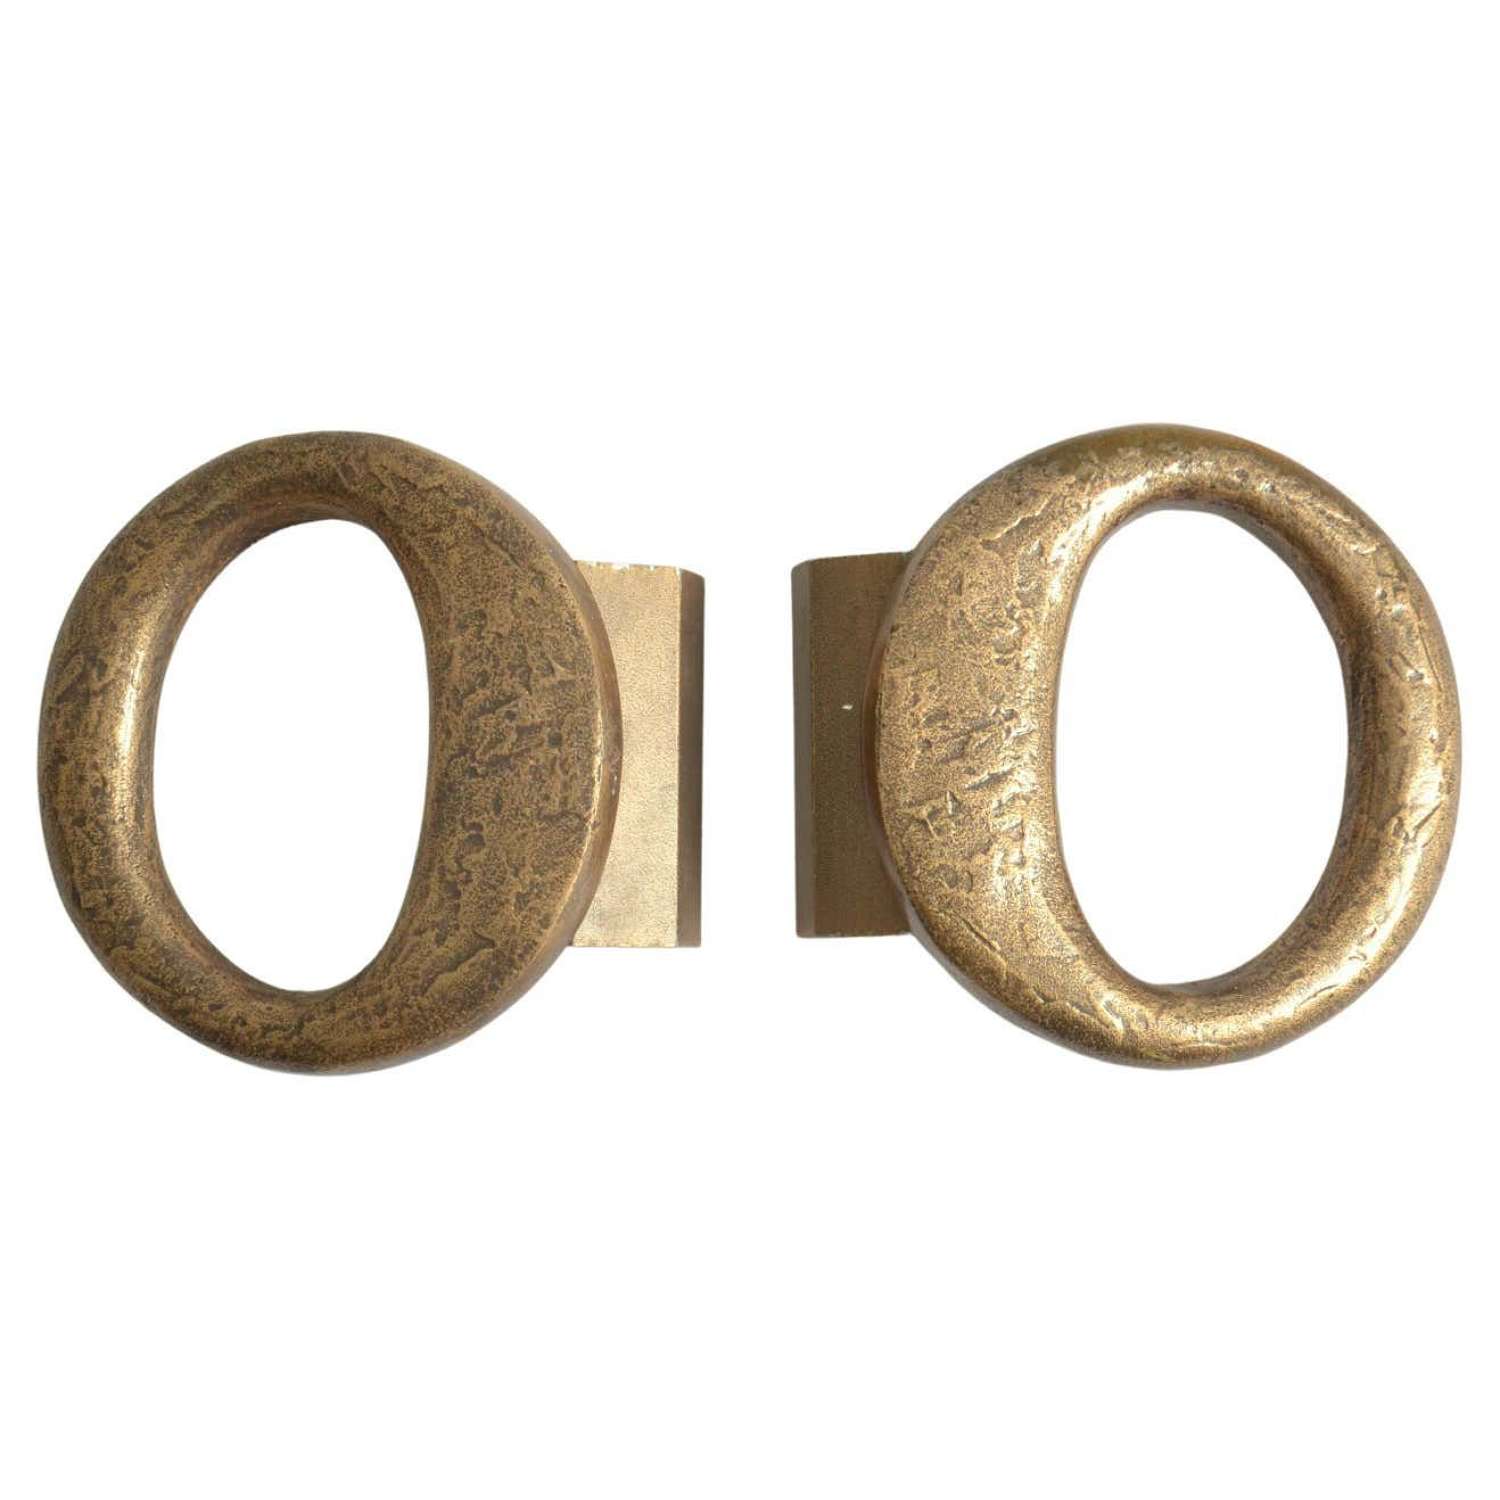 Pair of Round Bronze Door Handles with Oval Ring